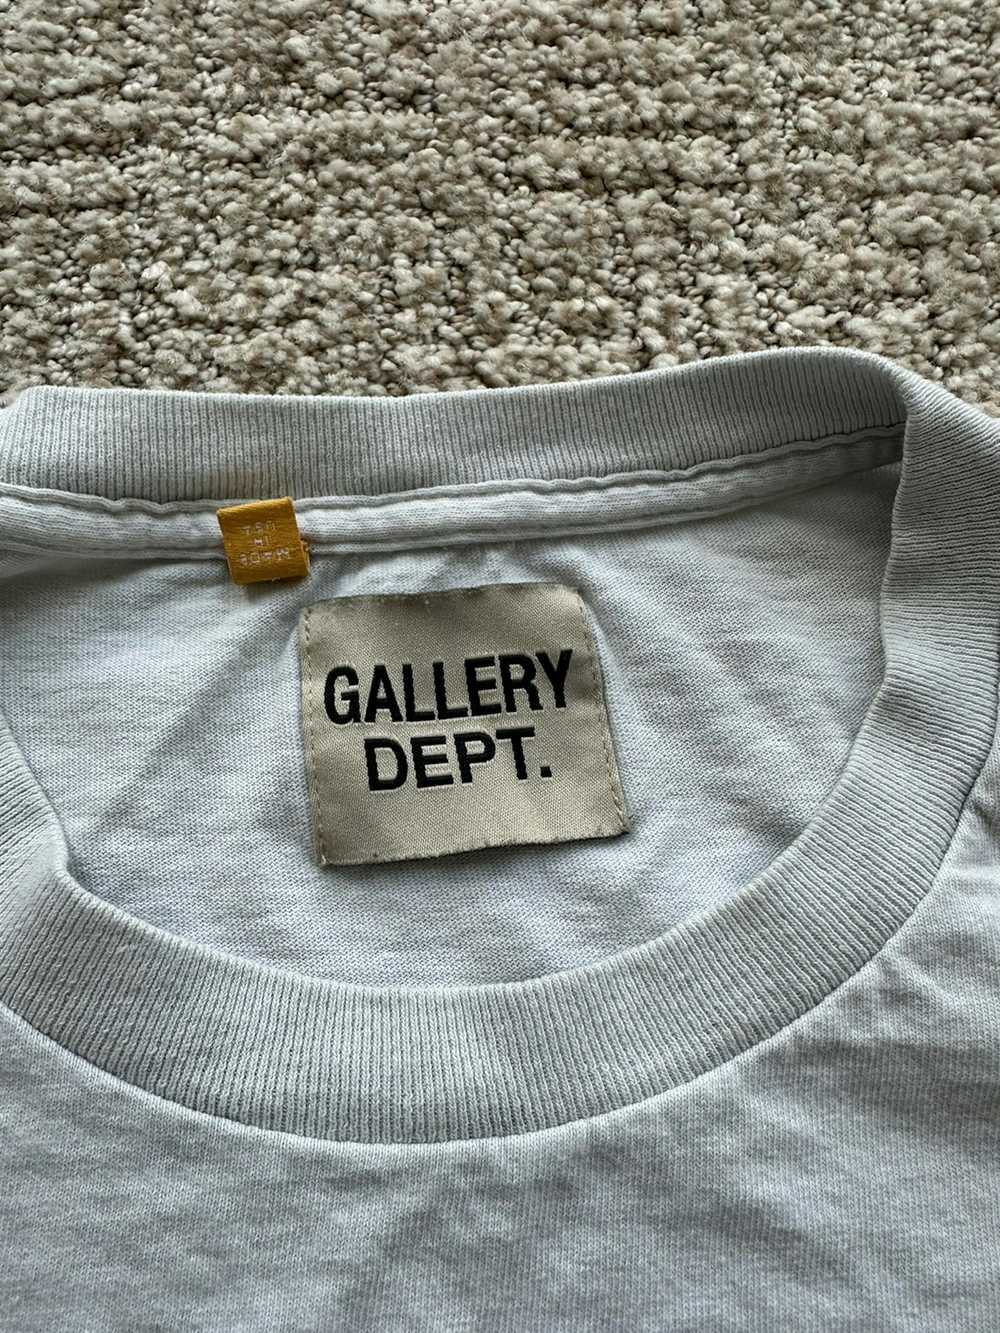 Gallery Dept. Gallery Dept T-Shirt - image 5